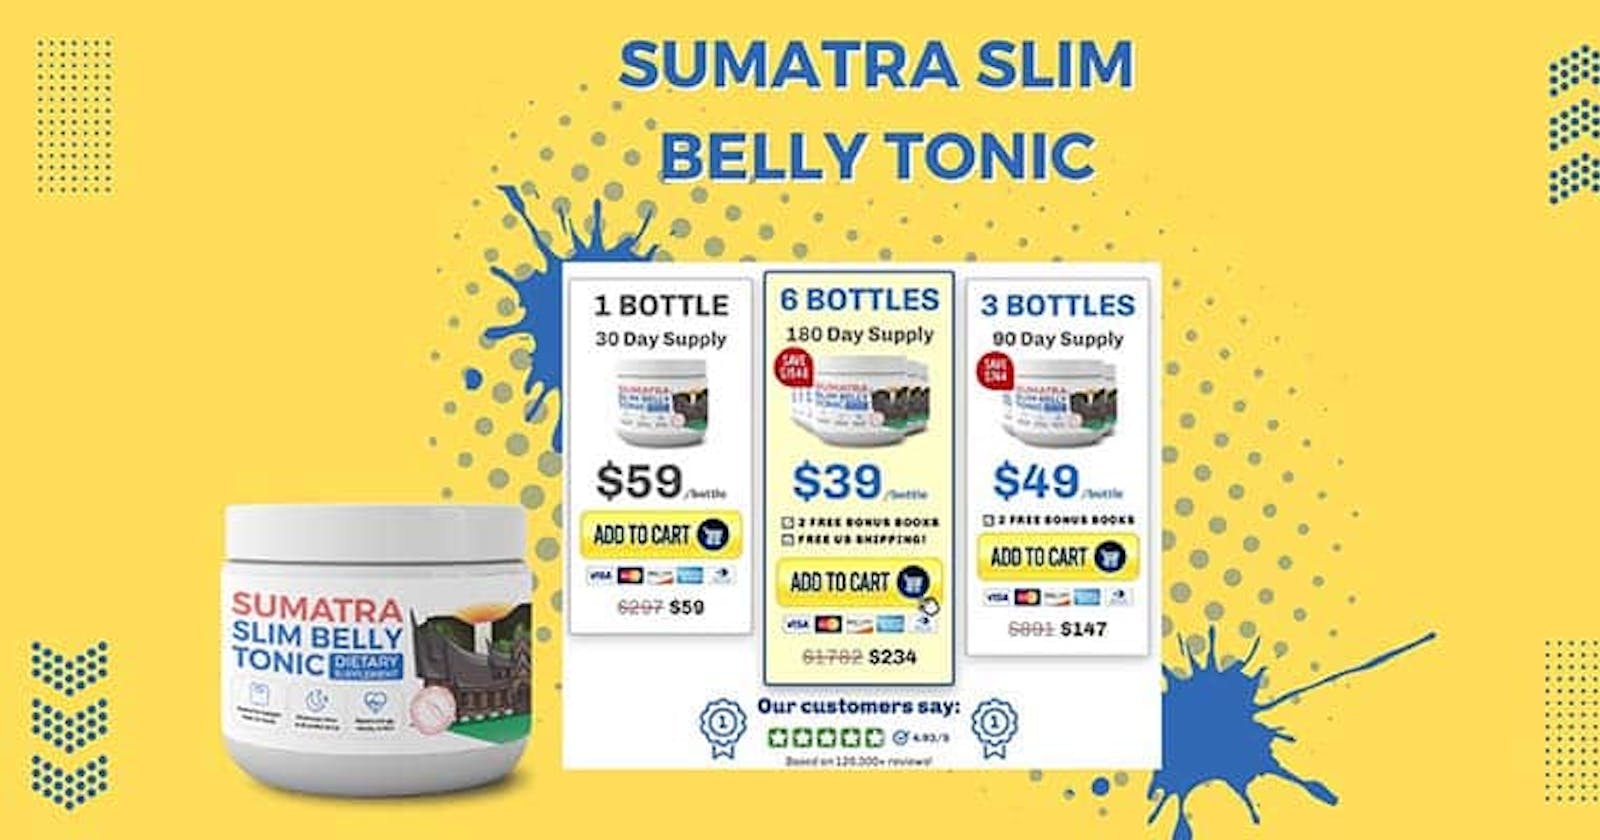 Sumatra Slim Belly Tonic Économisez et efficace Achetez maintenant!